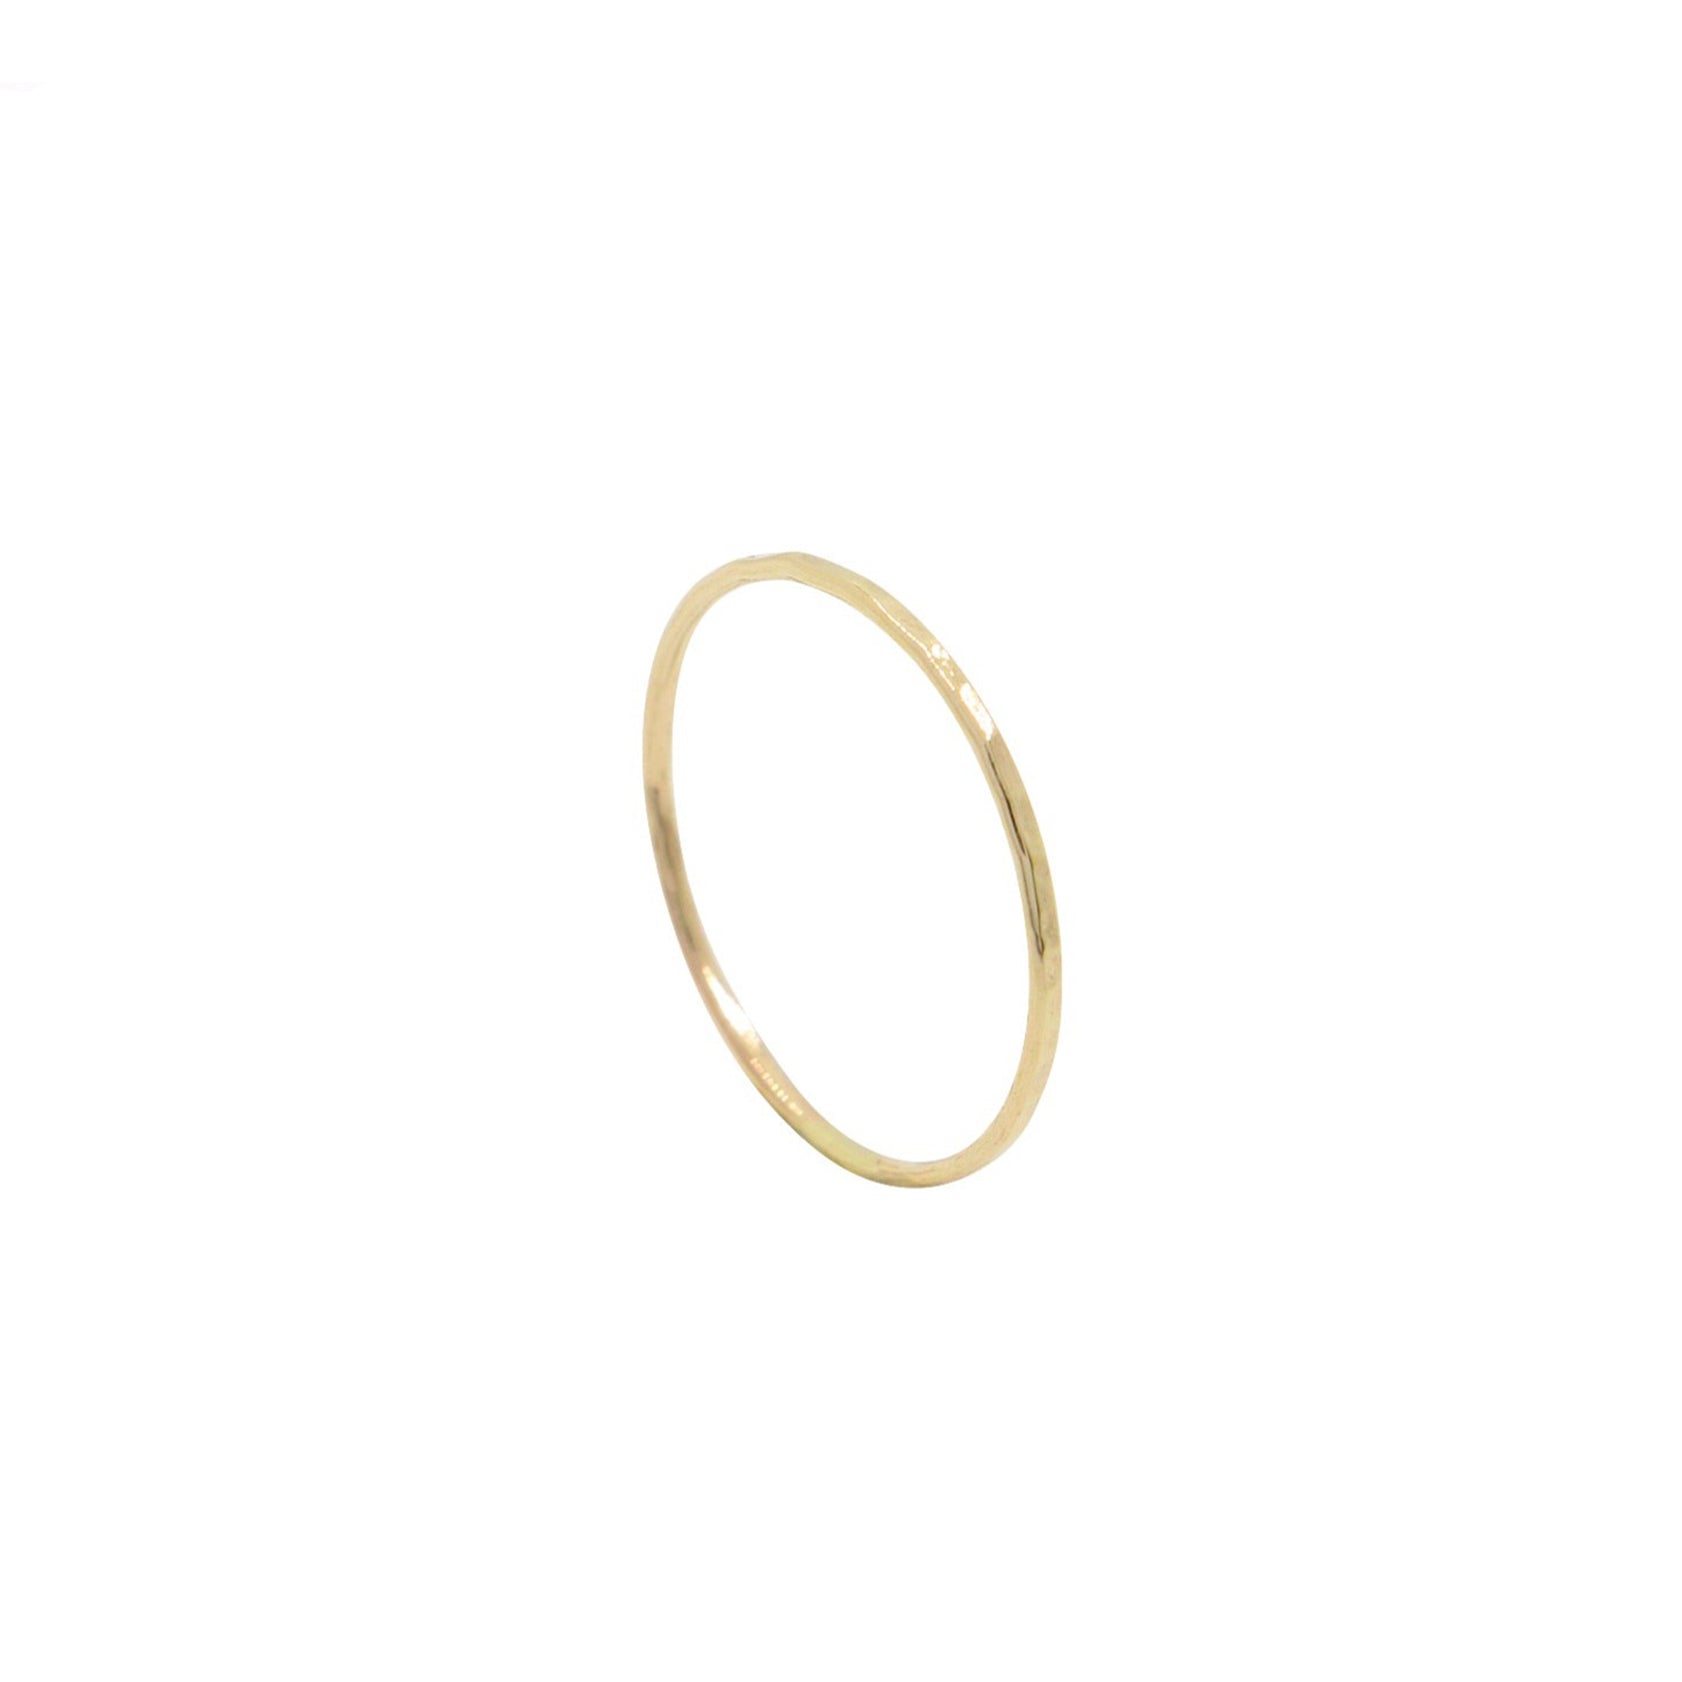 Discover Gosia Orlowska's Gold Ring Collection